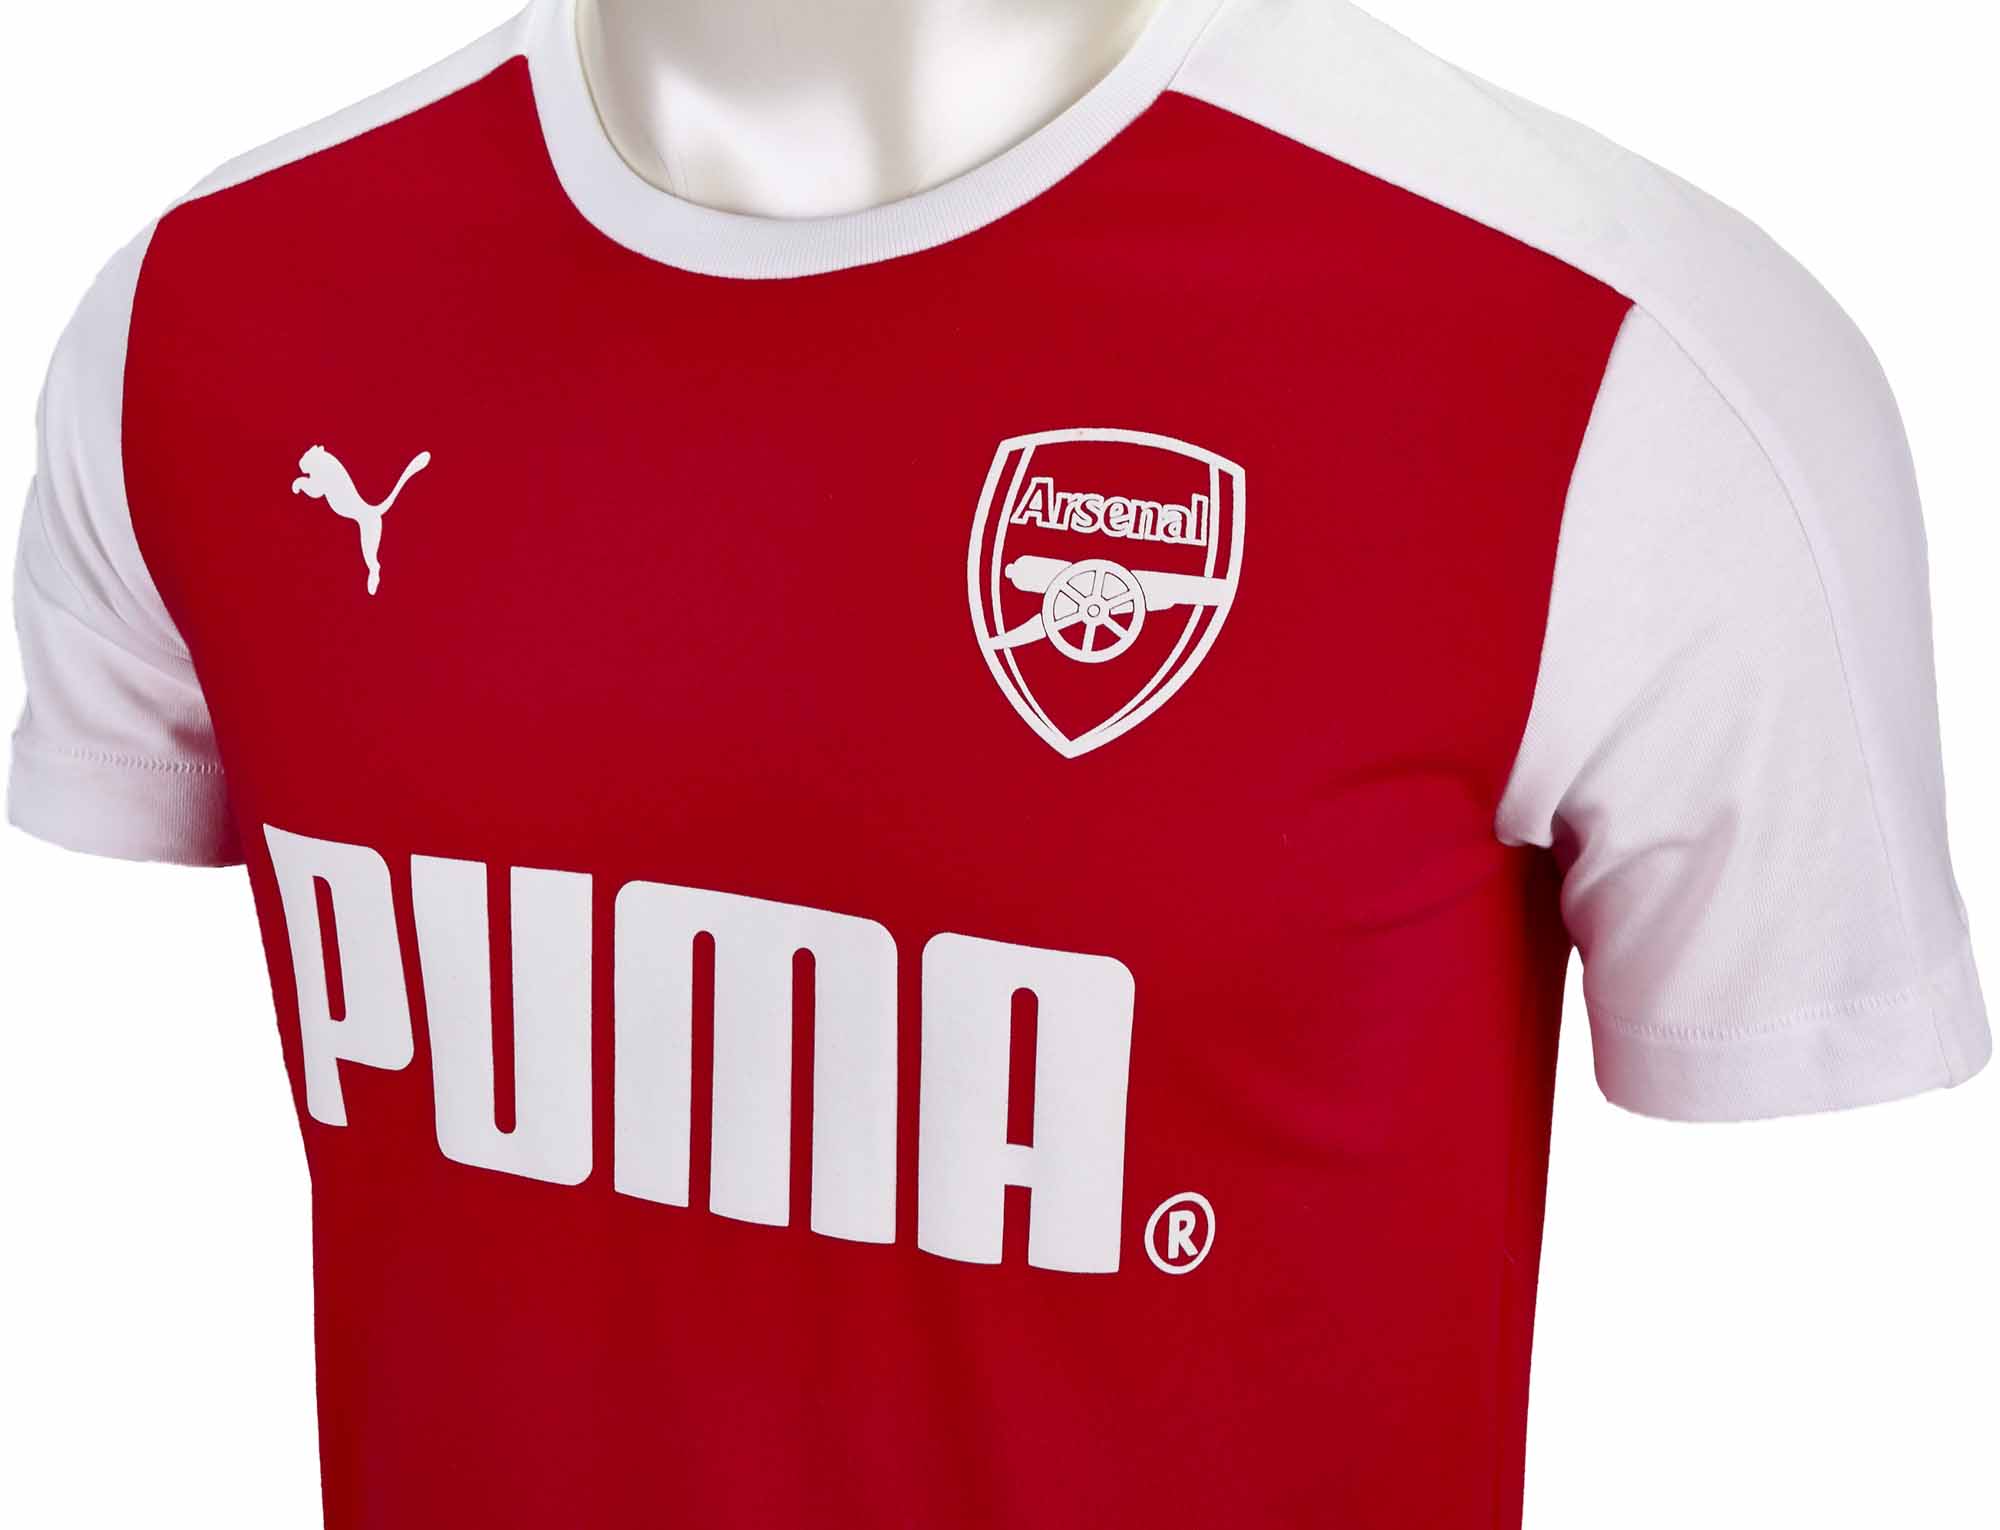 Arsenal Puma Tee - Red Arsenal Soccer T 